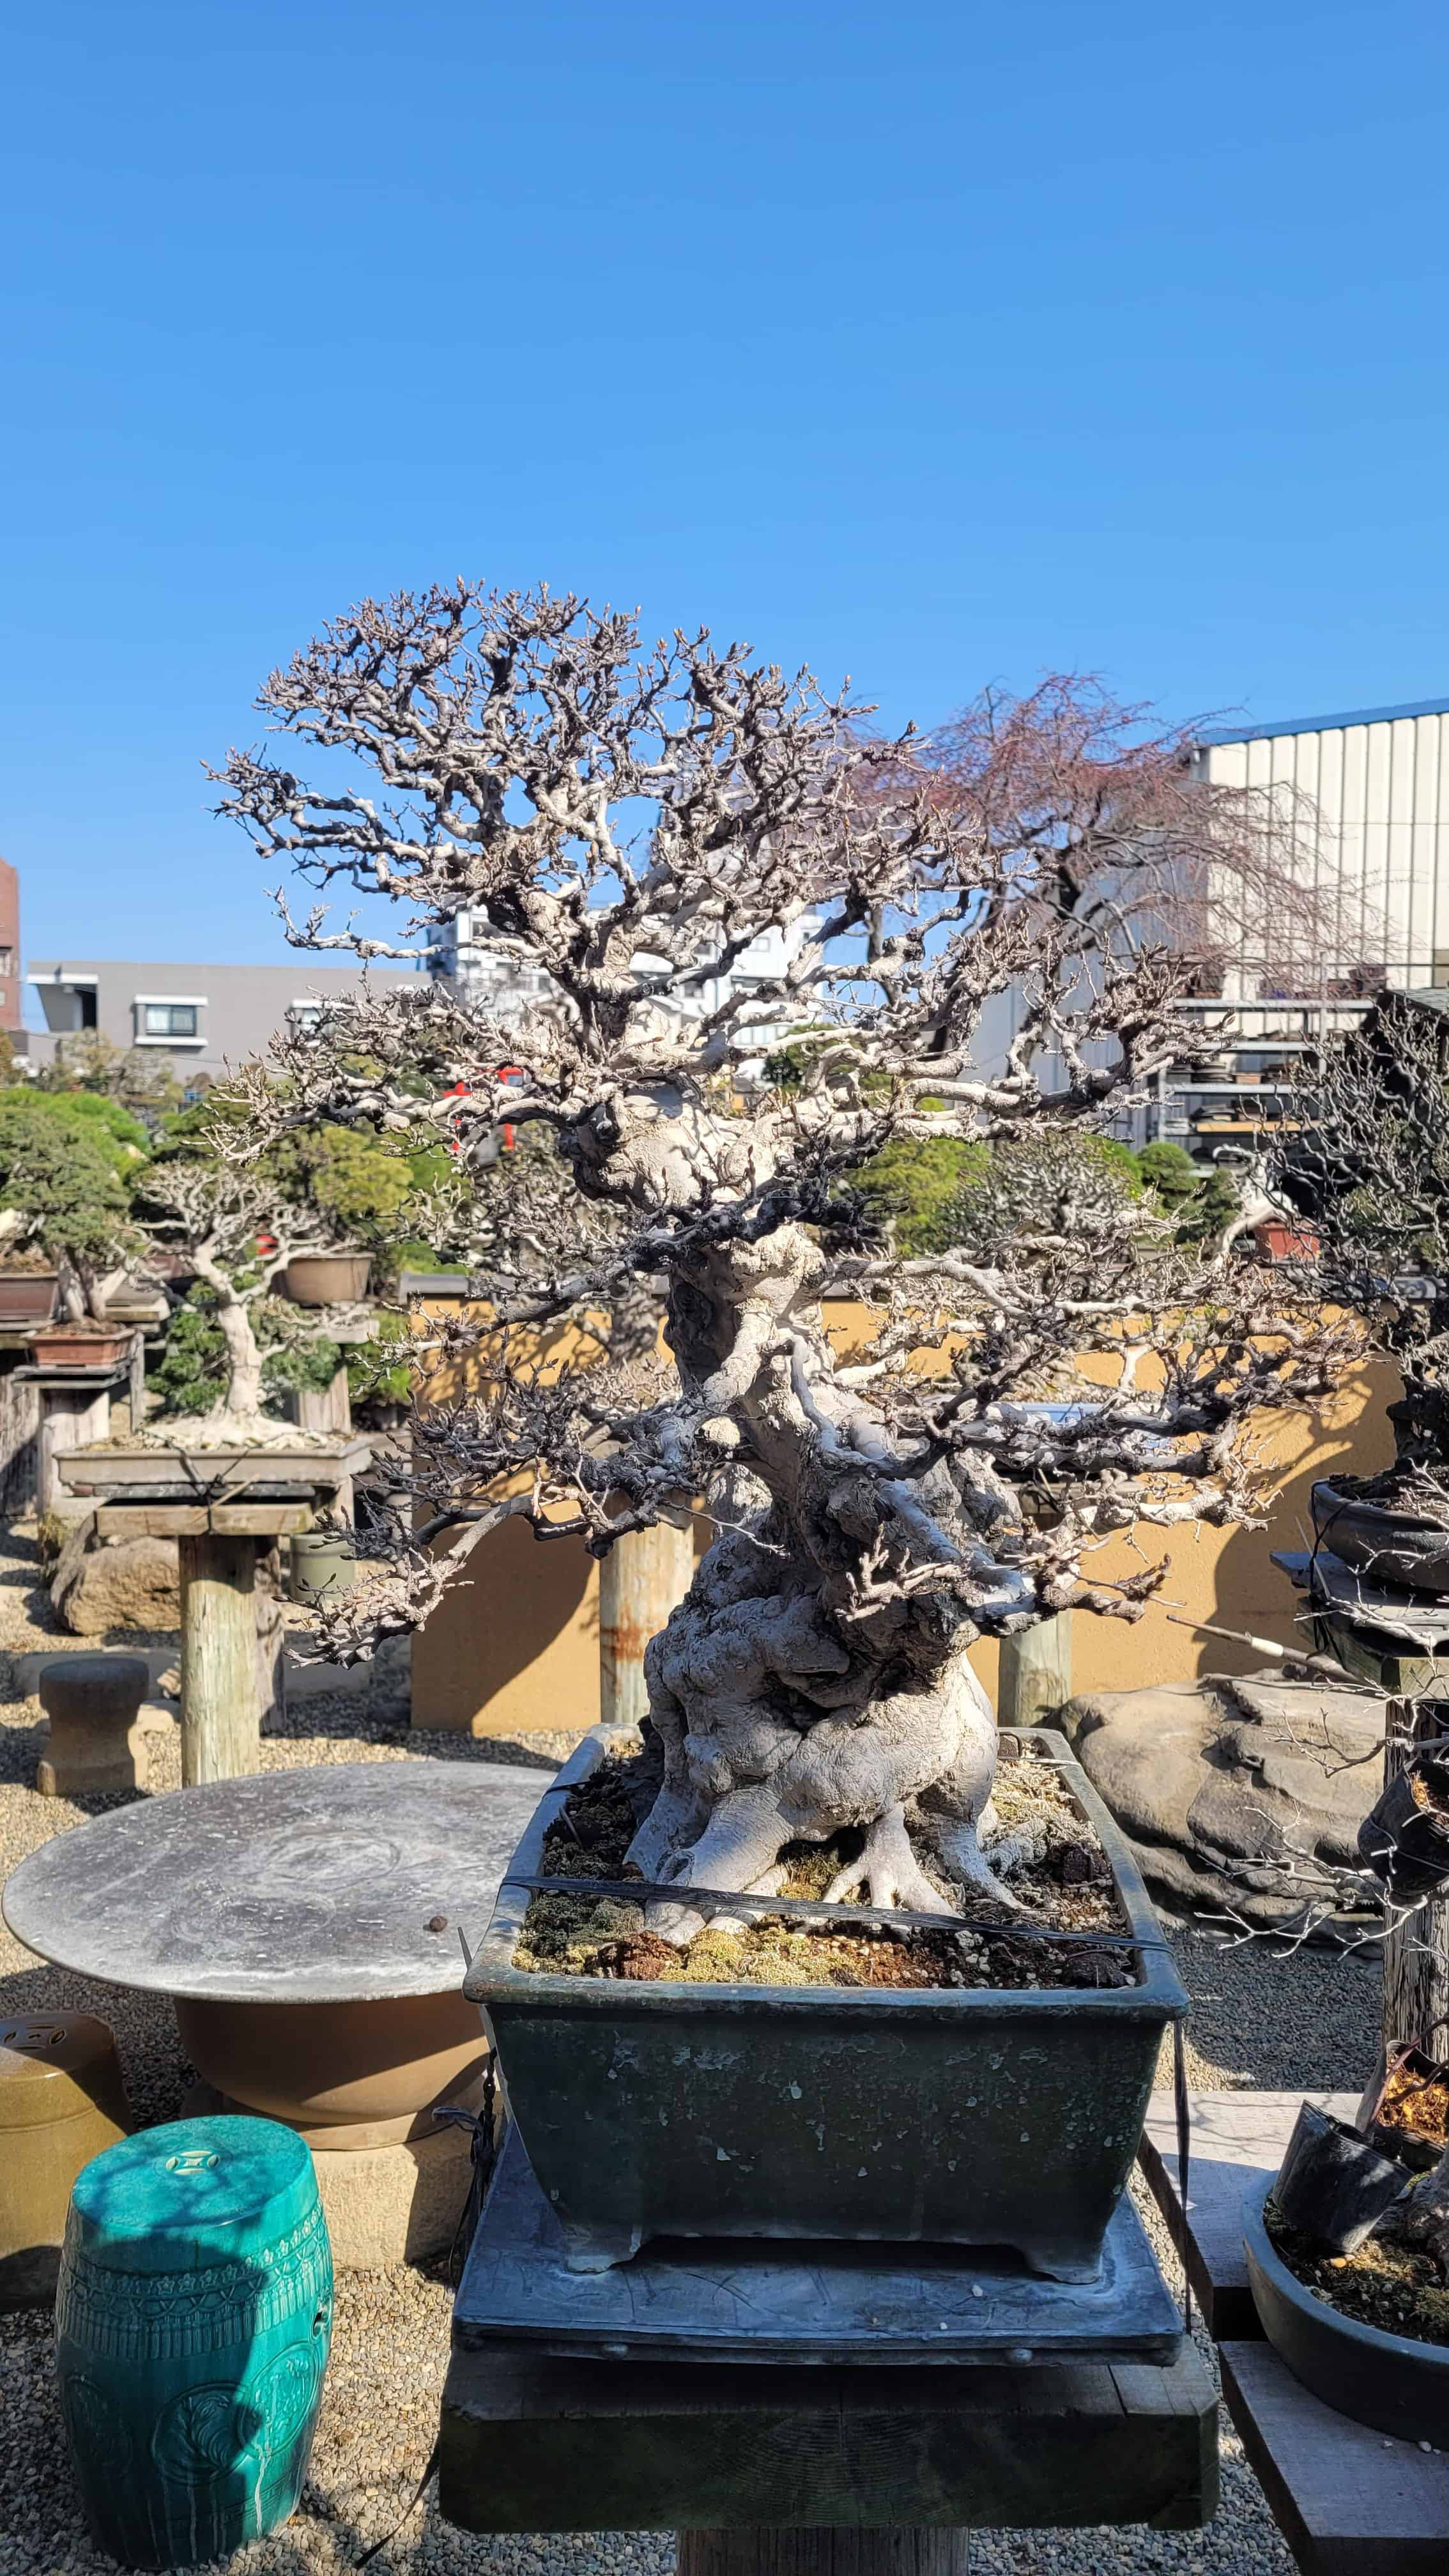 A maple bonsai tree from kobayashi in Japan